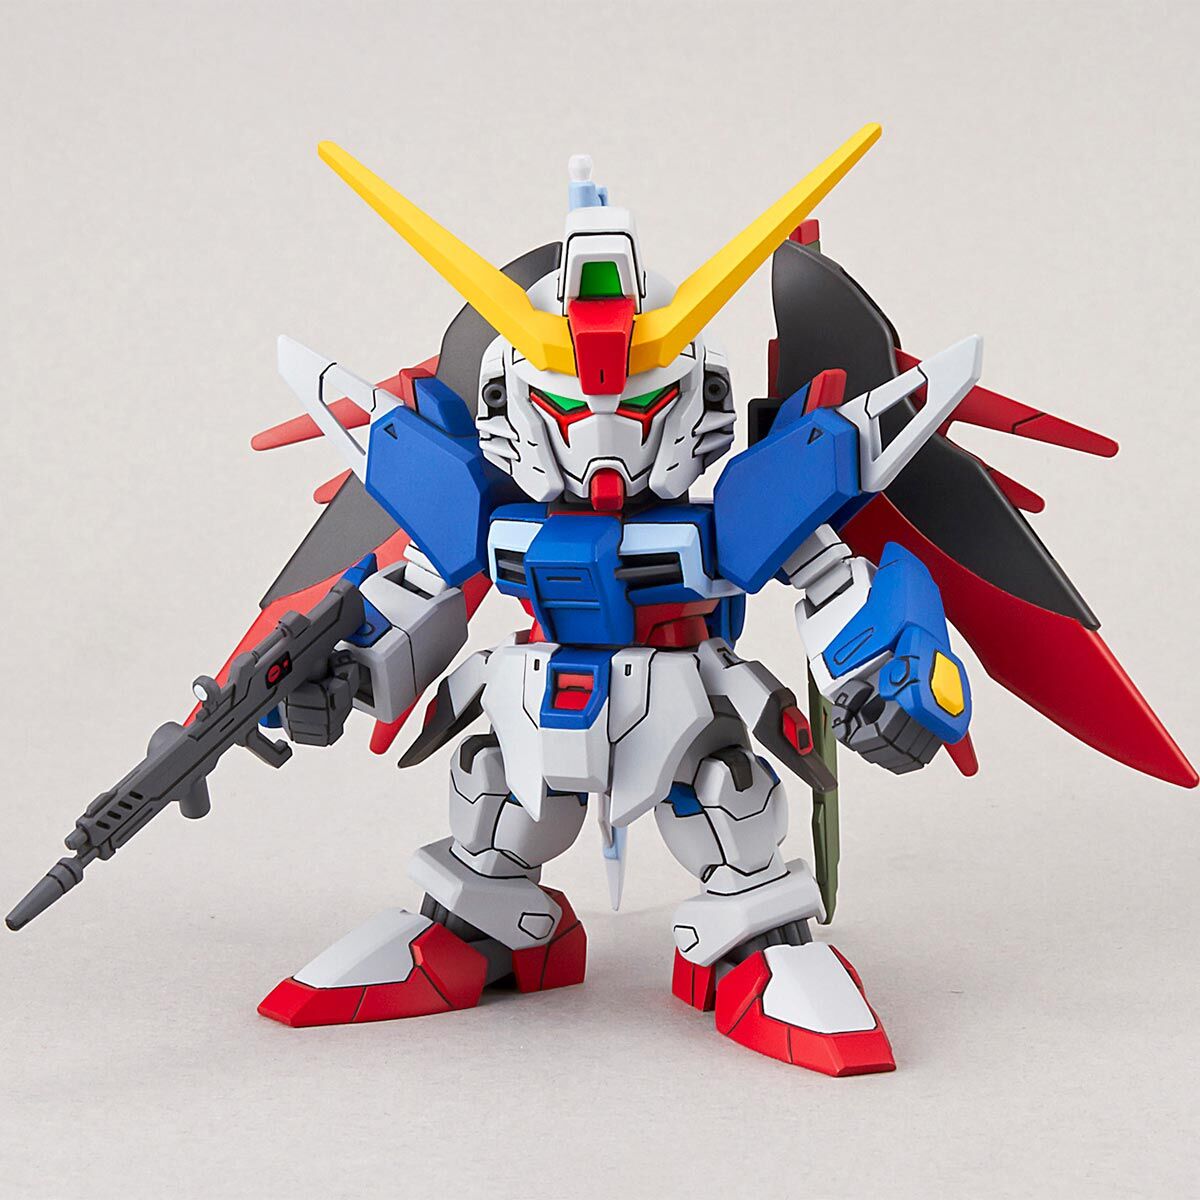 SD Gundam EX-Standard 09 Destiny Gundam